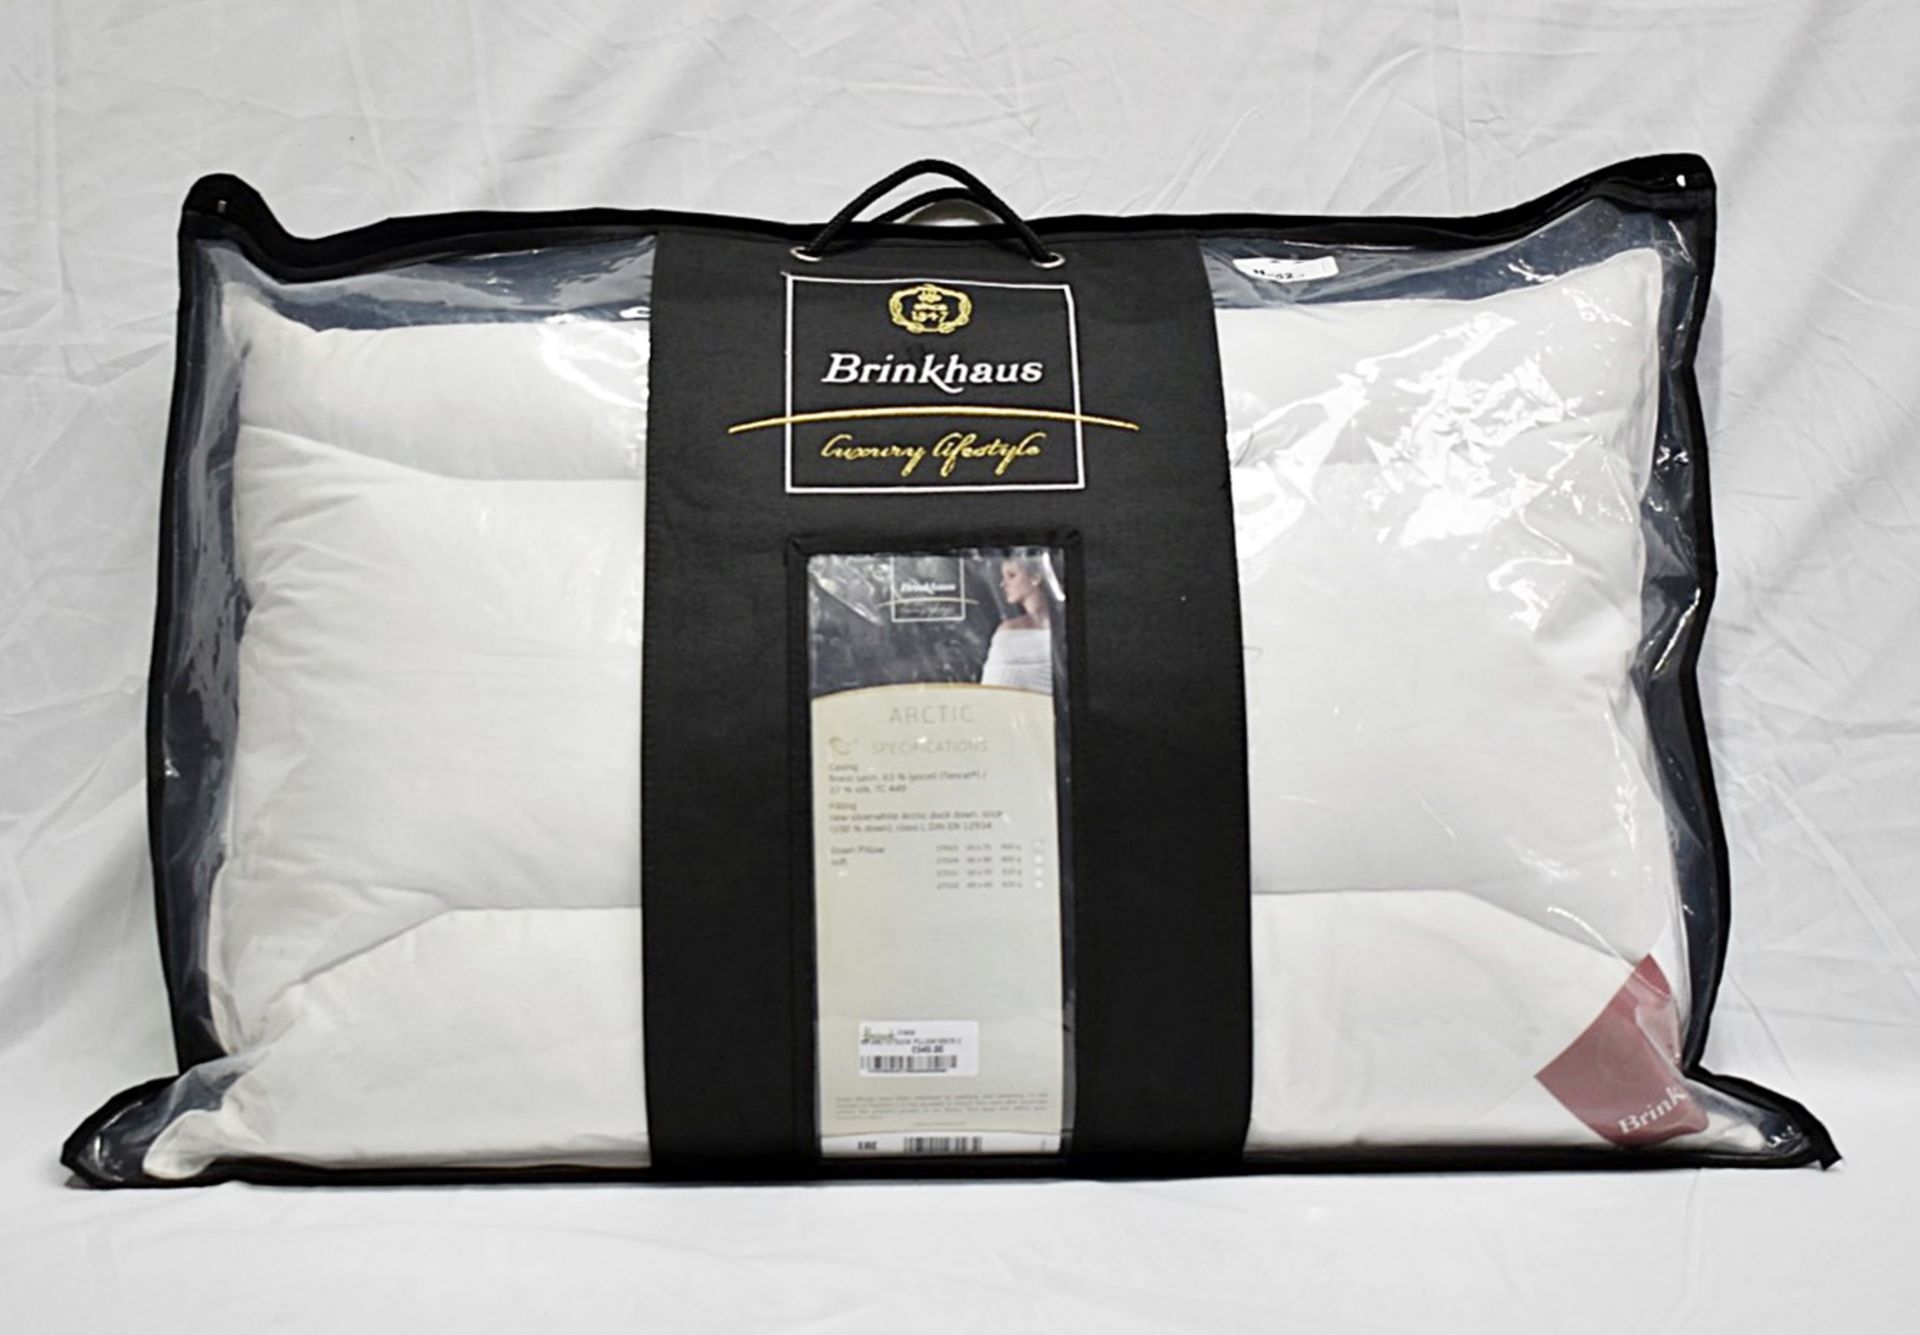 1 x BRINKHAUS Arctic Duck Down Pillow (50cm x 75cm) - Original Price £549.00 - Unused Shop Stock - - Image 2 of 6